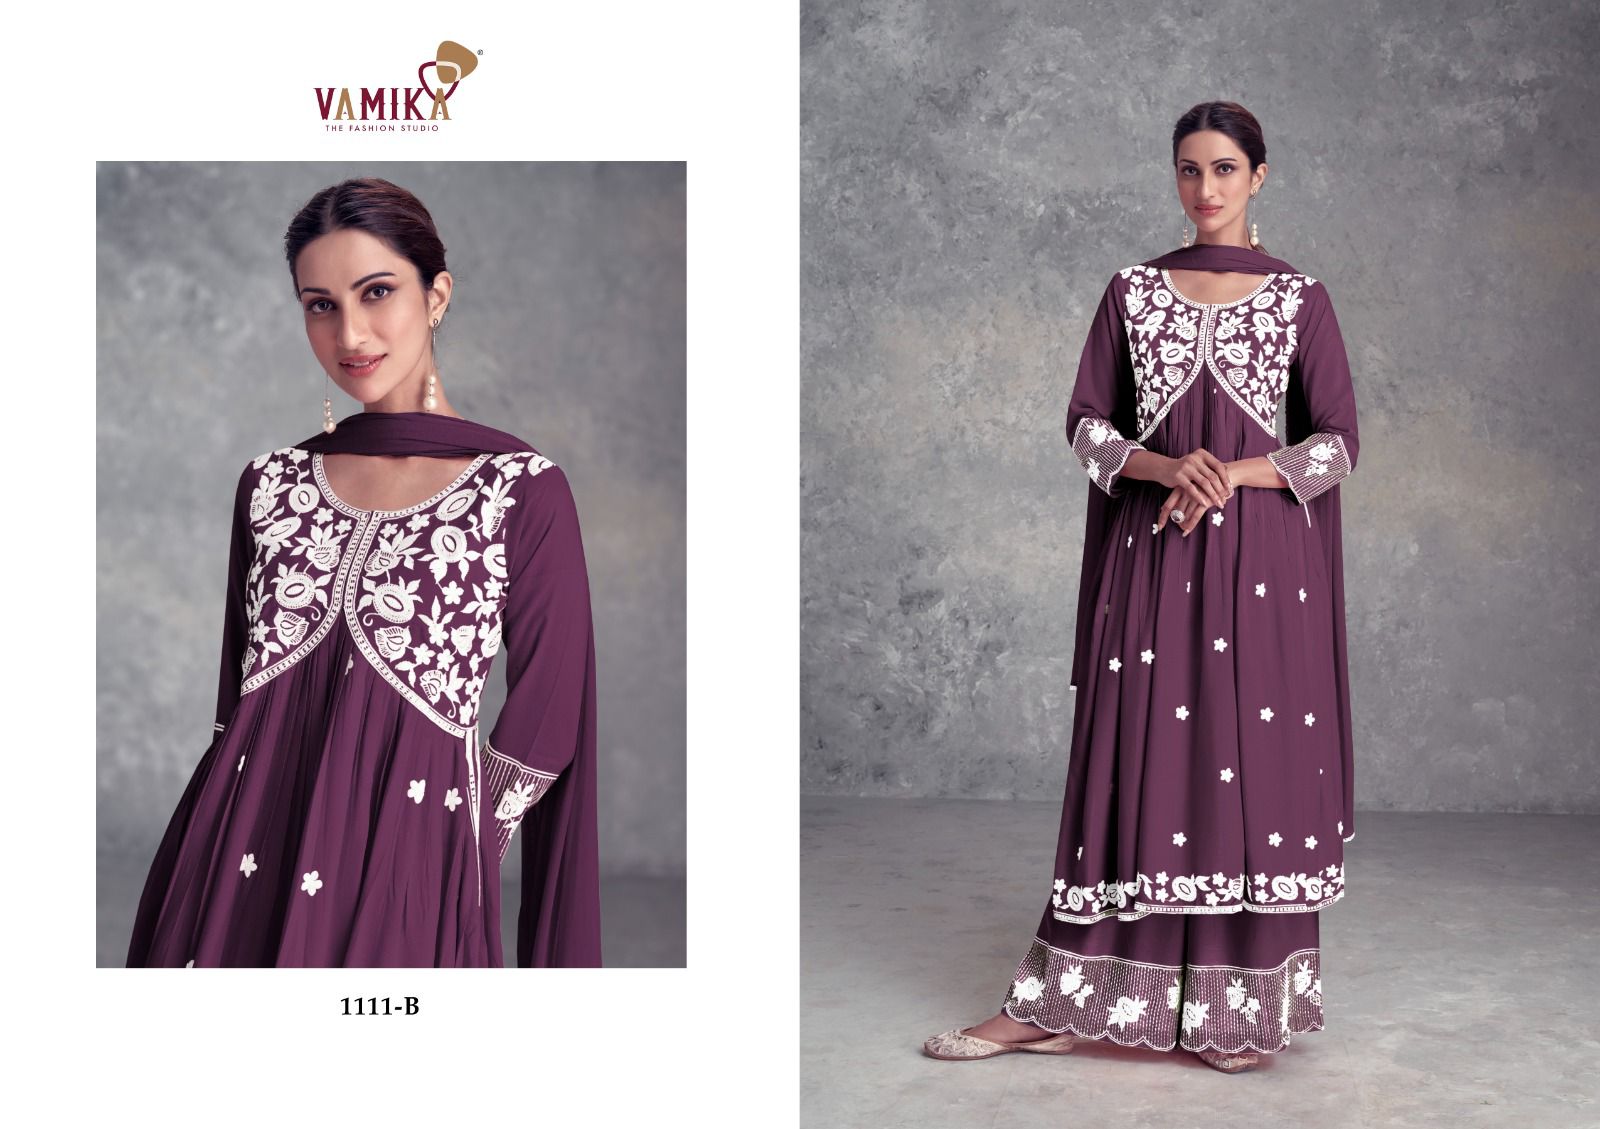 Vamika Aadhira Vol 9 collection 6